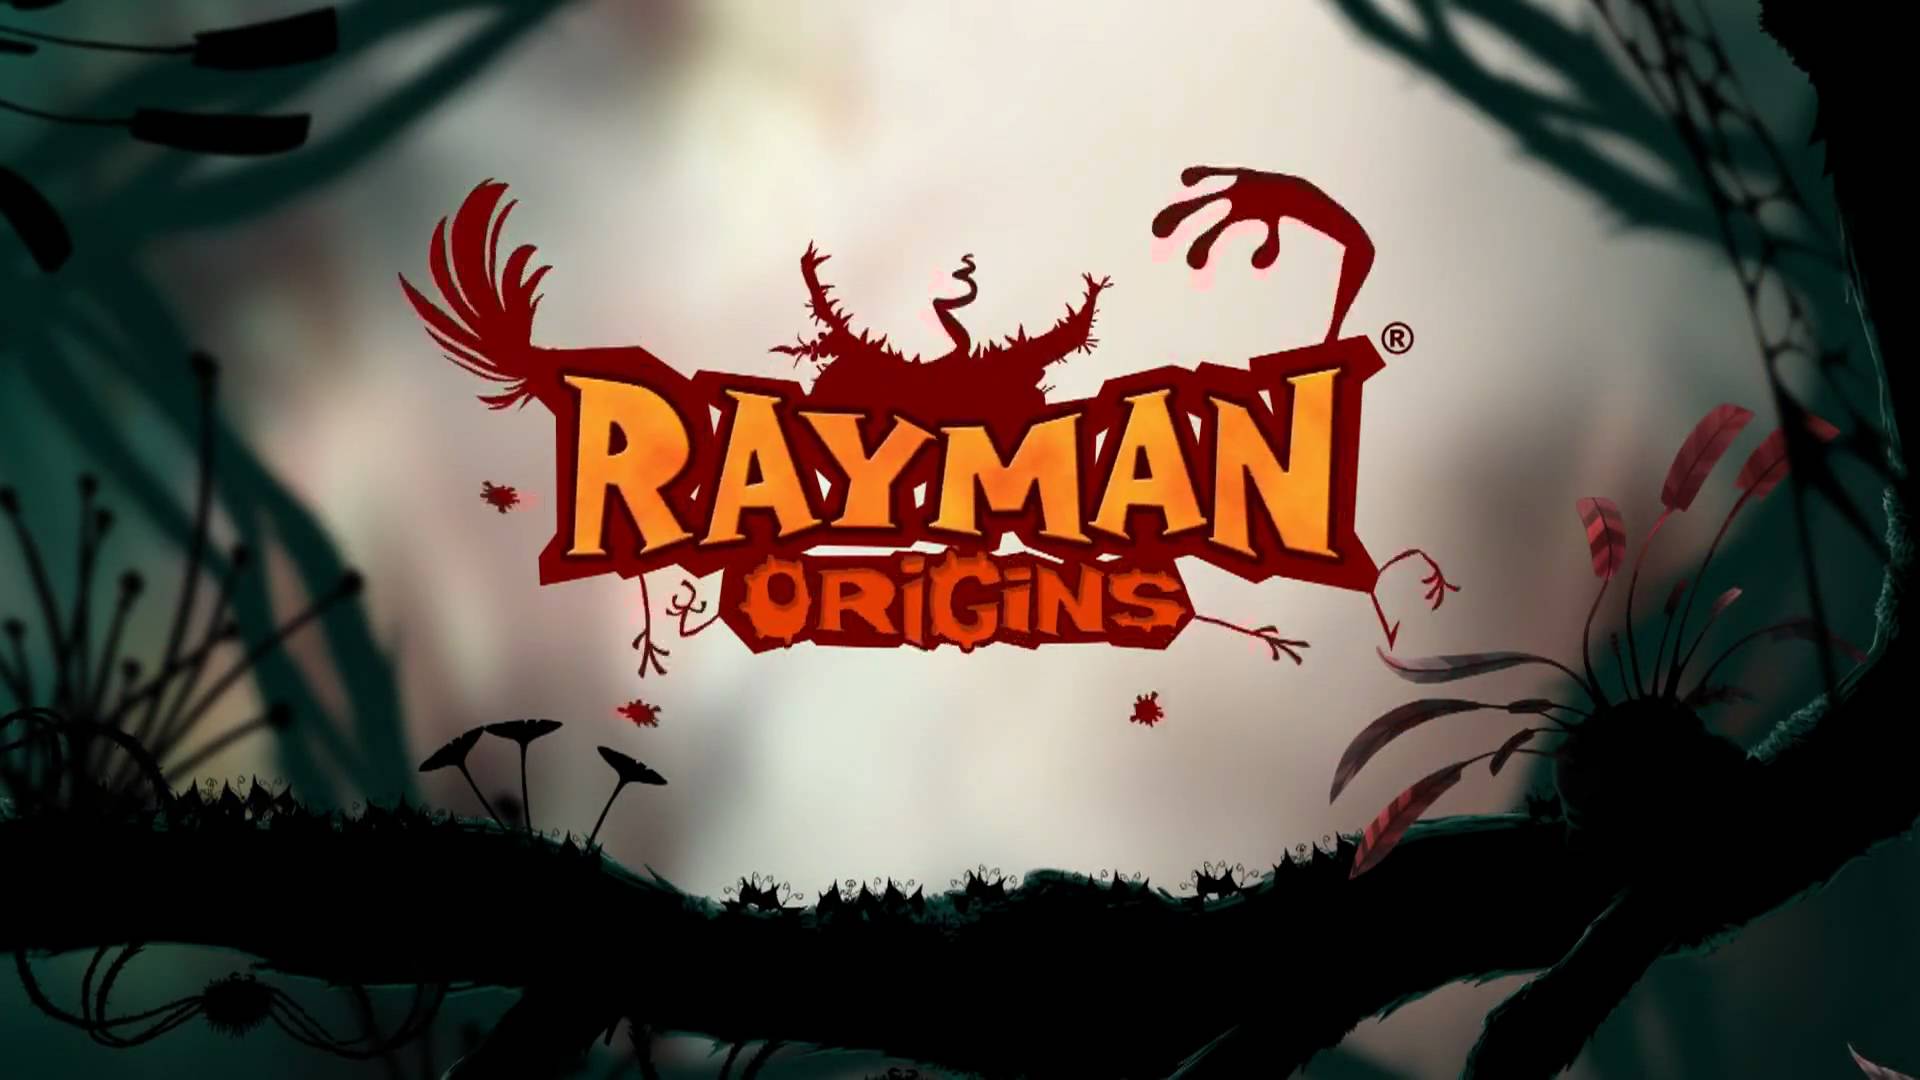 Rayman Origins Backgrounds, Compatible - PC, Mobile, Gadgets| 1920x1080 px